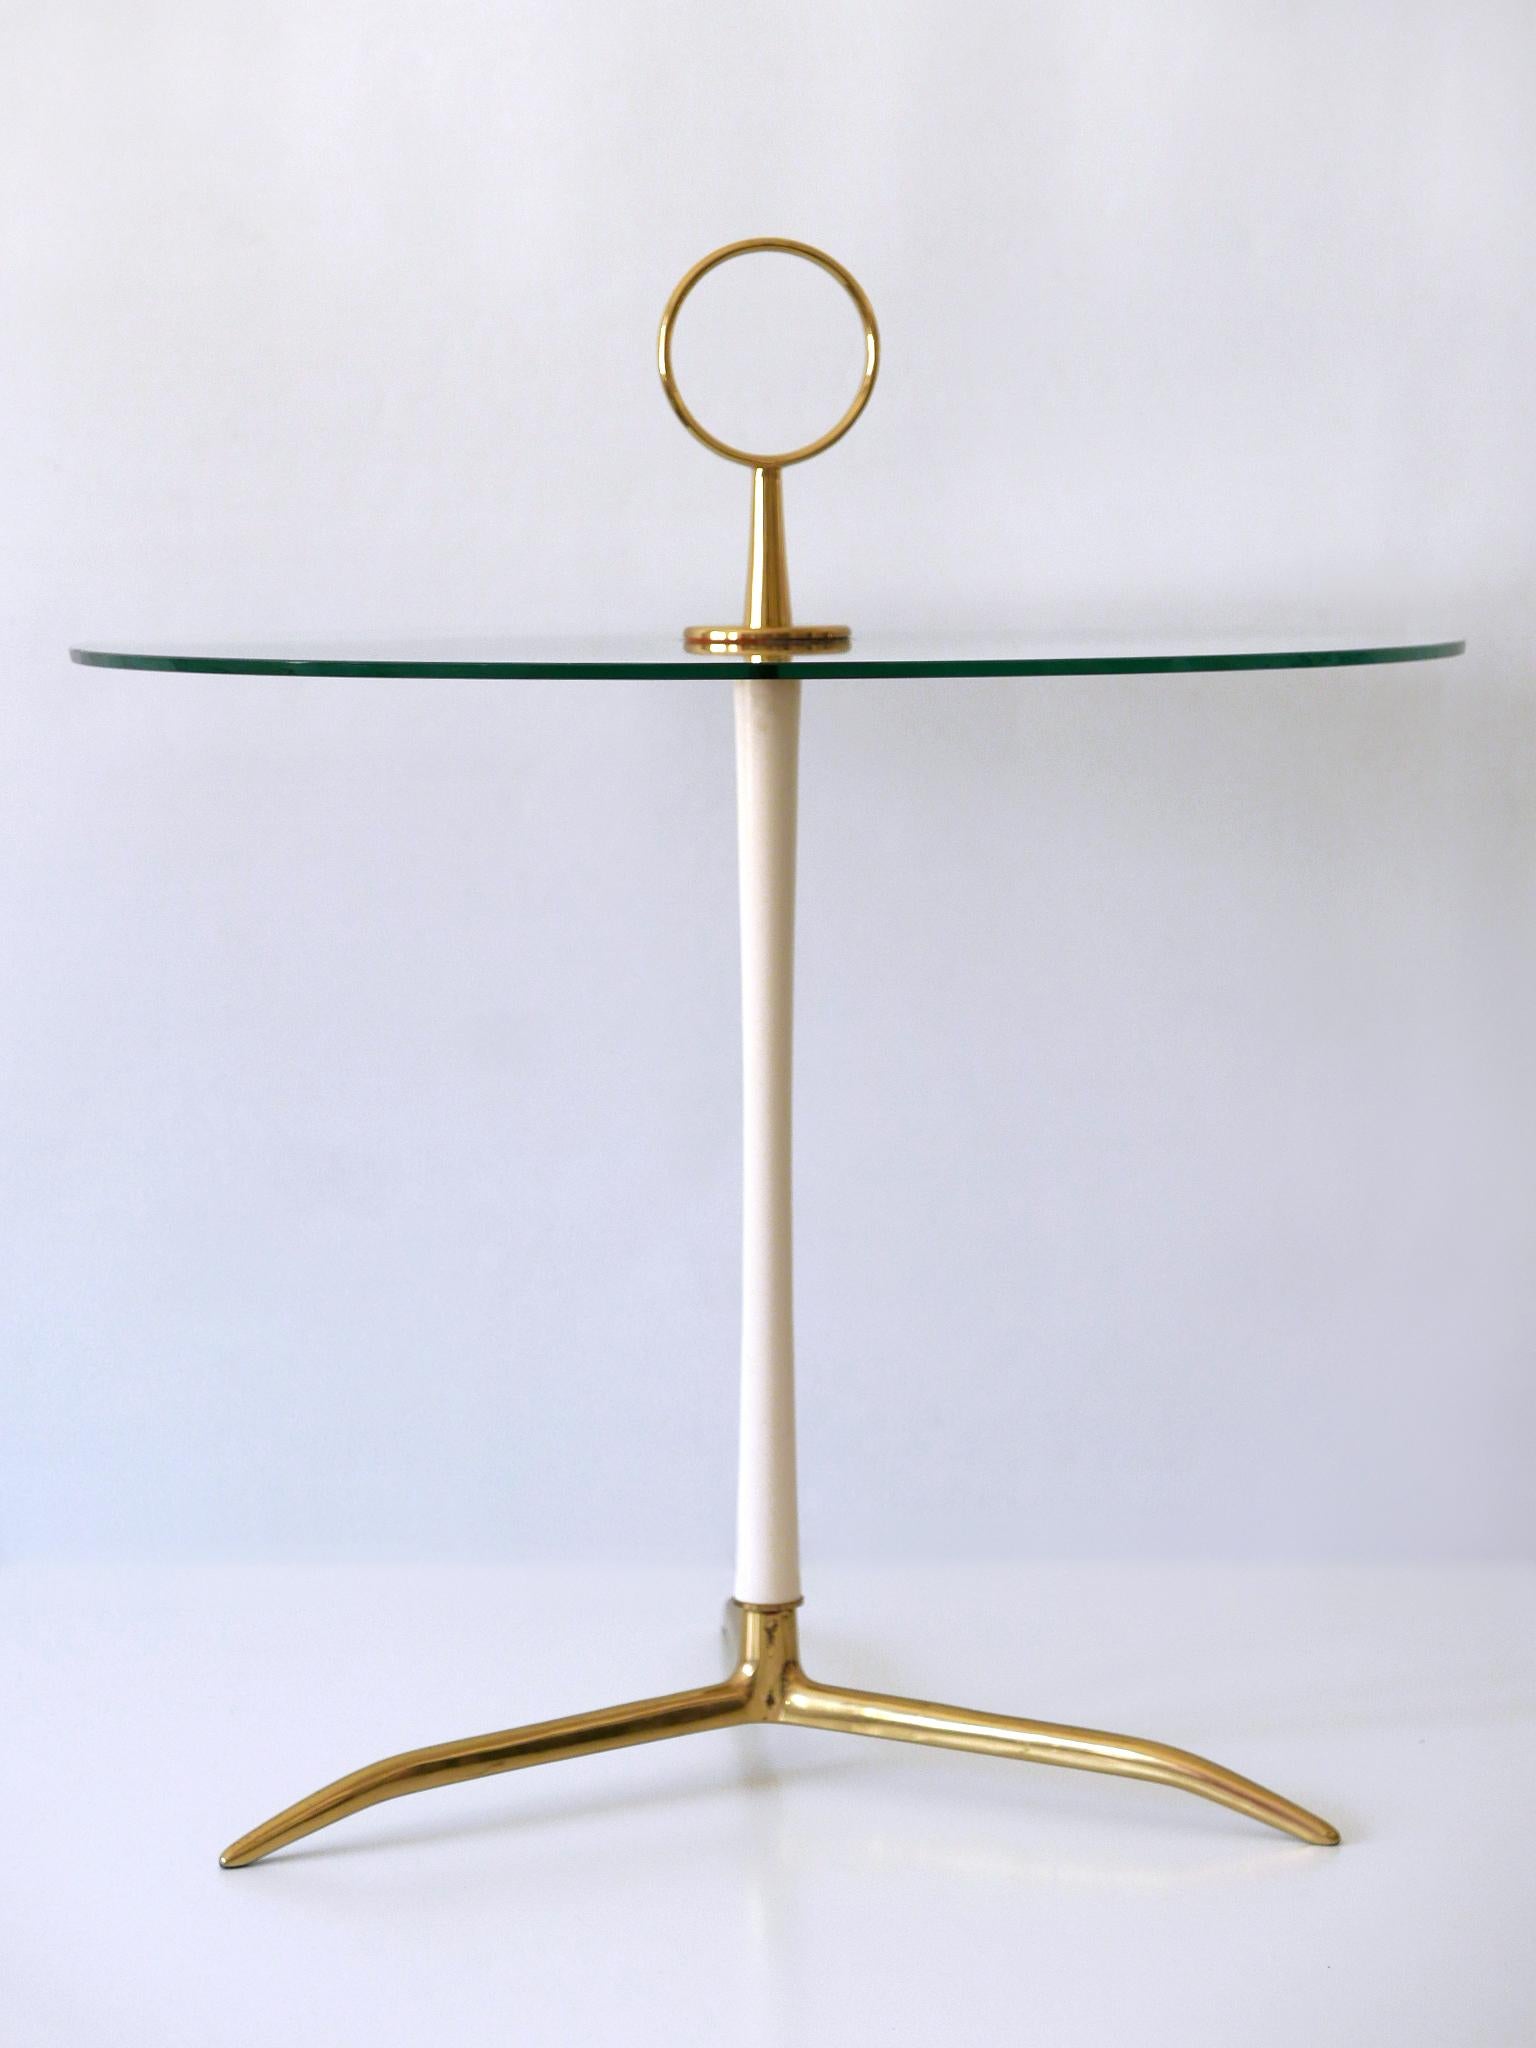 Elegant Mid-Century Modern Side Table by Vereinigte Werkstätten Germany 1950s For Sale 7